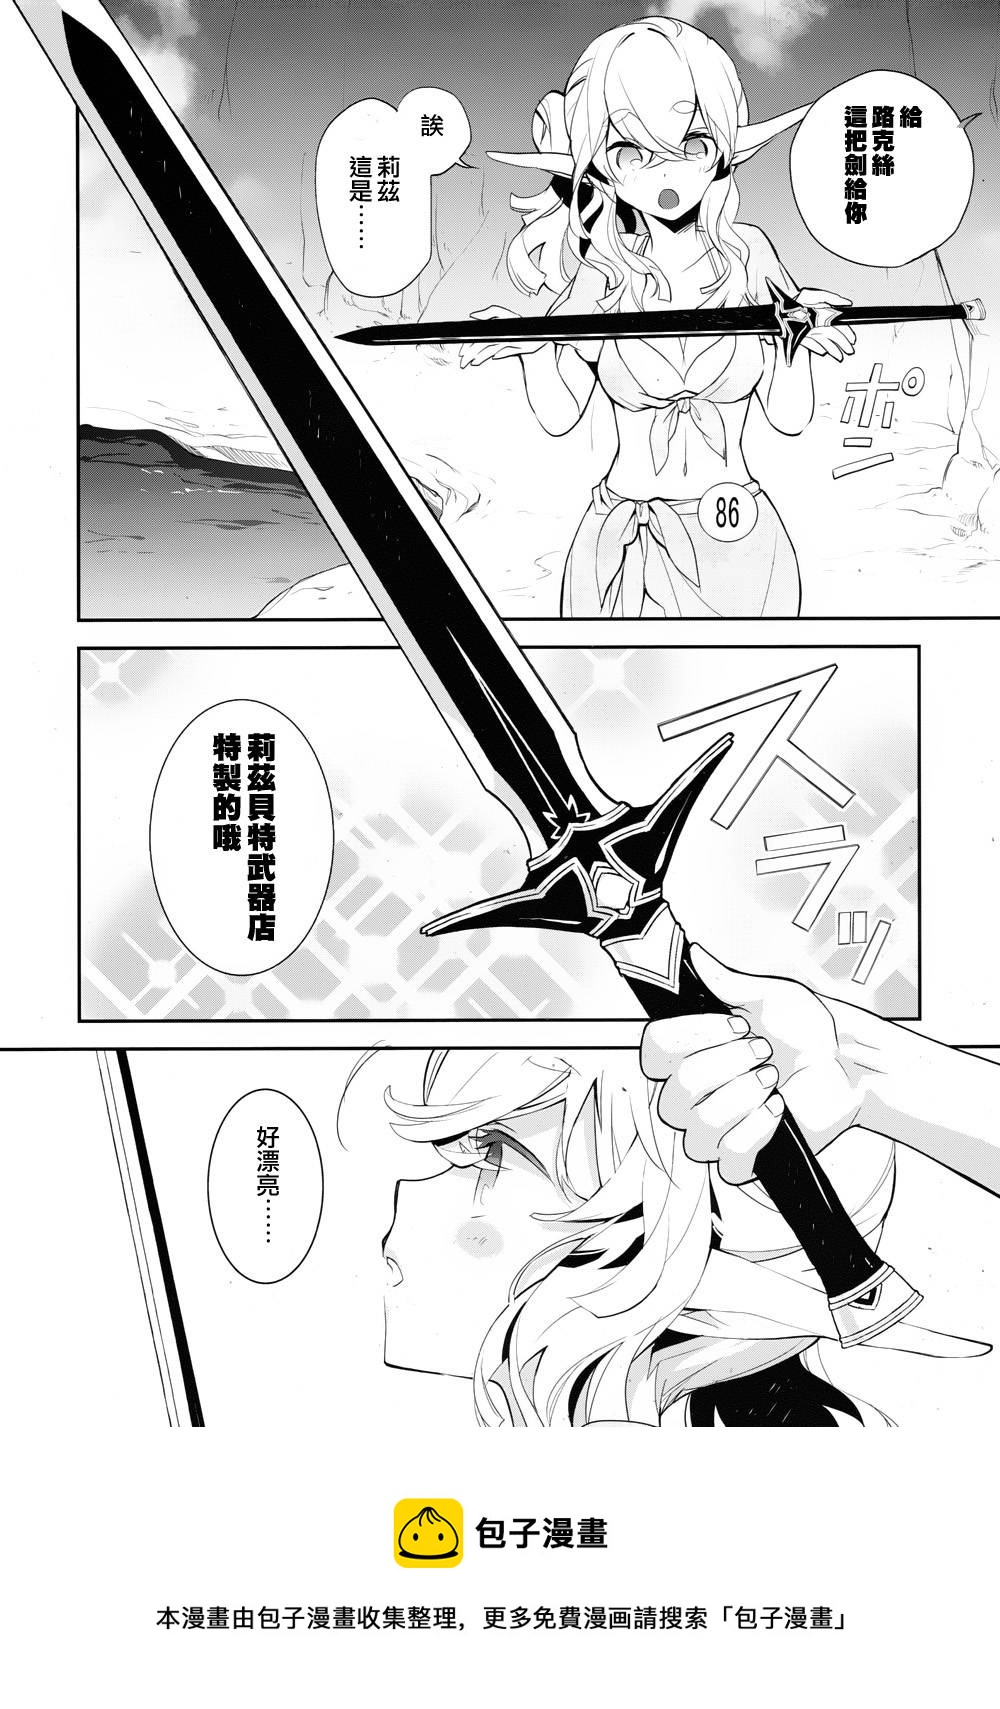 Sword Art Online少女們的樂章 - 第09話 - 3